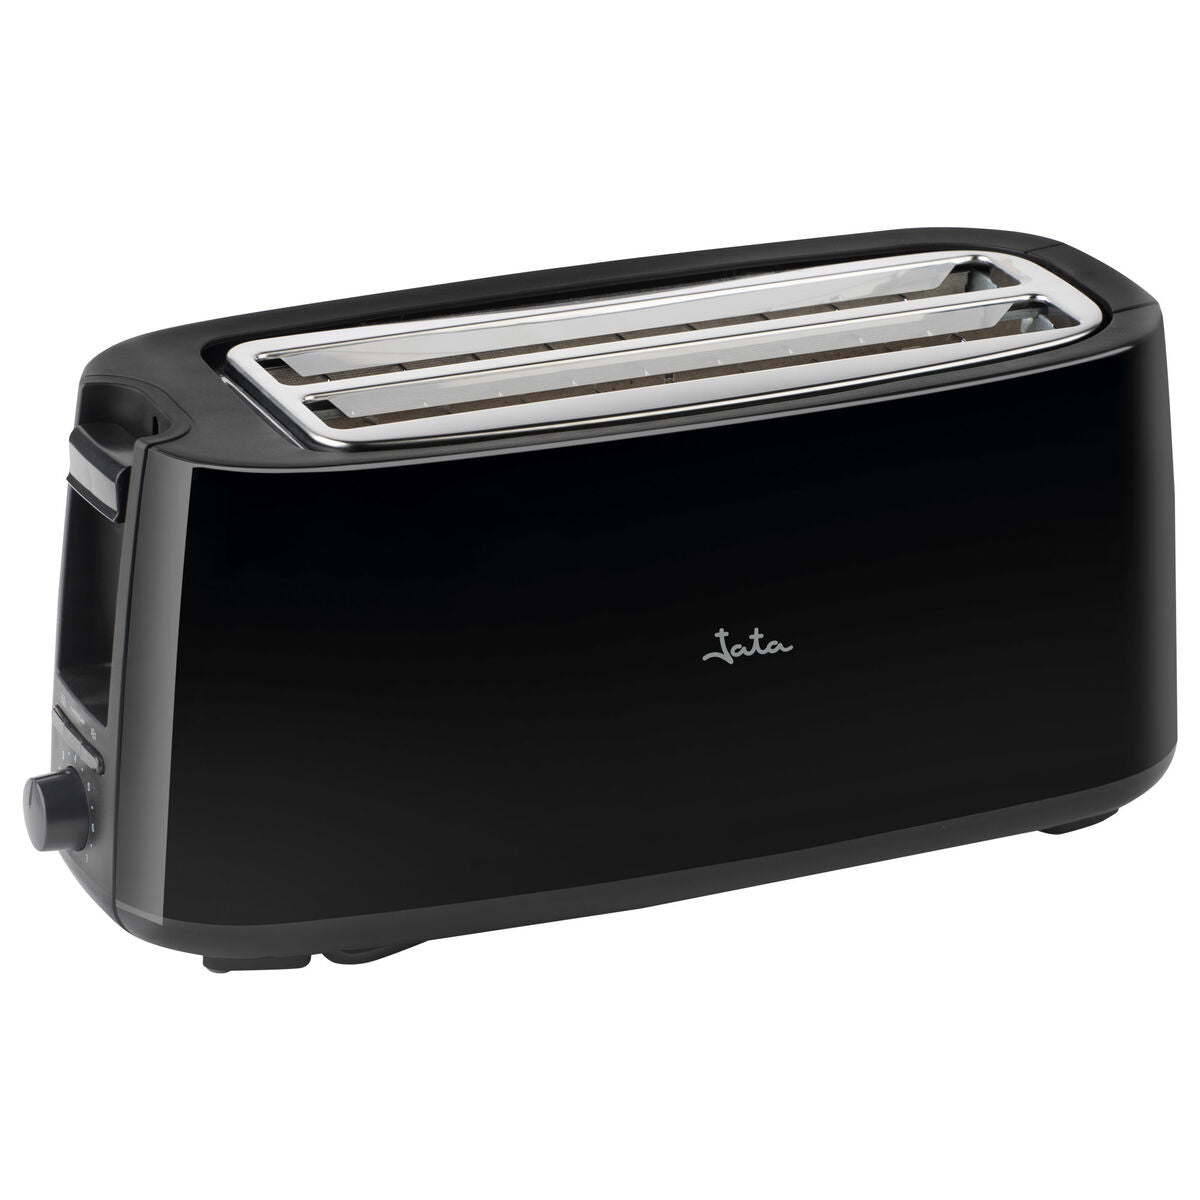 Toaster JATA 1400 W - CA International  